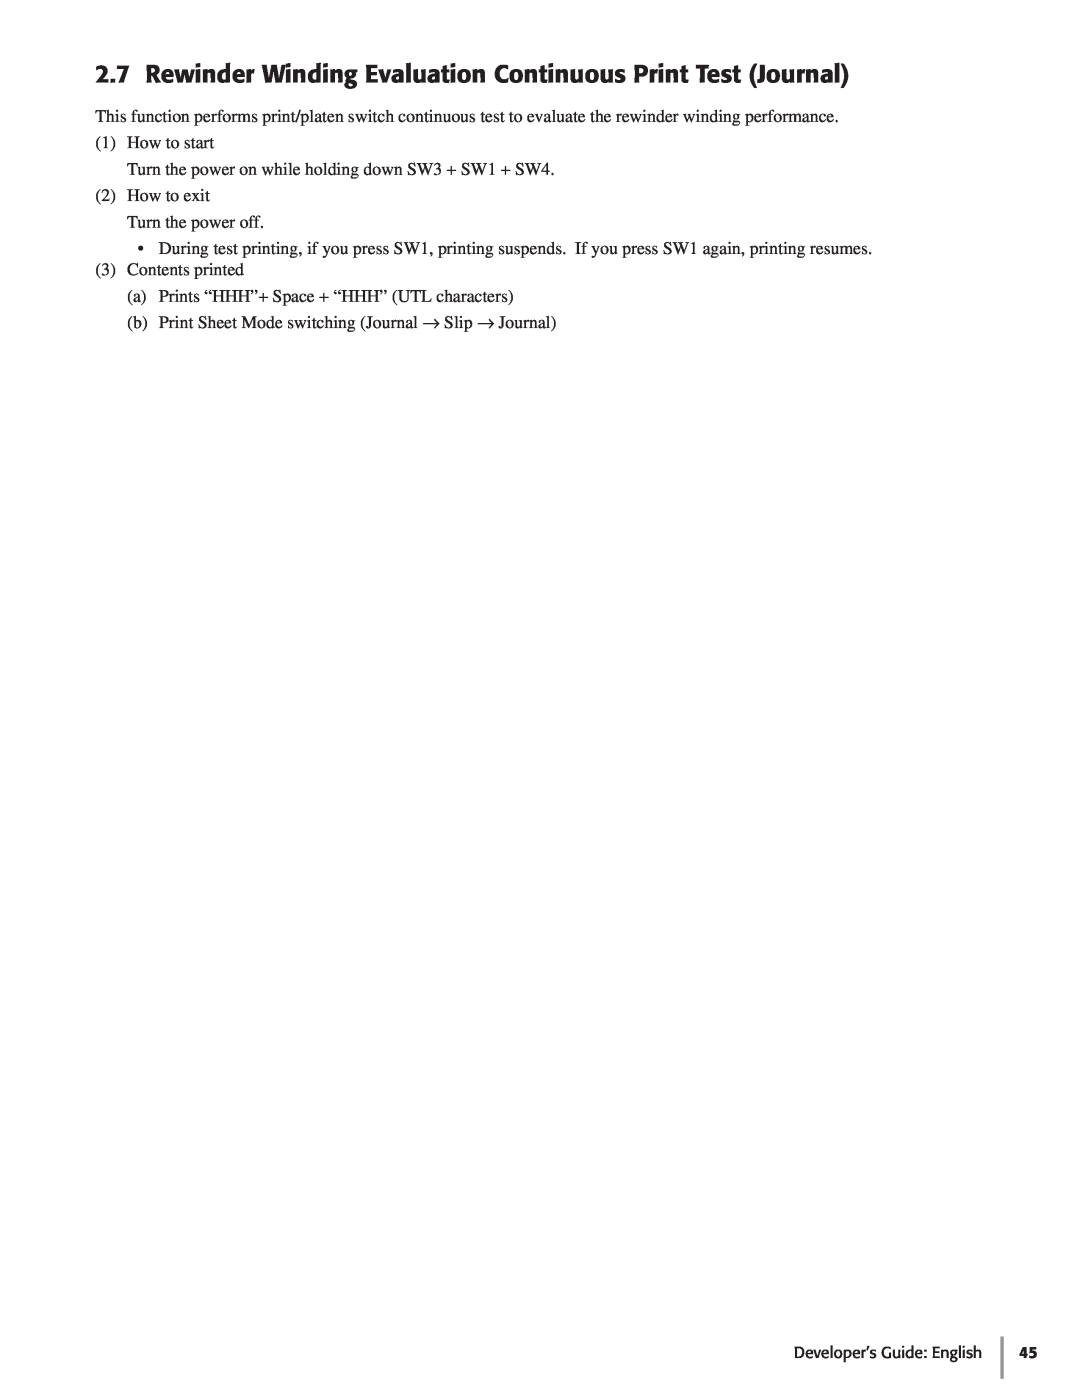 Oki 425D manual Rewinder Winding Evaluation Continuous Print Test Journal 